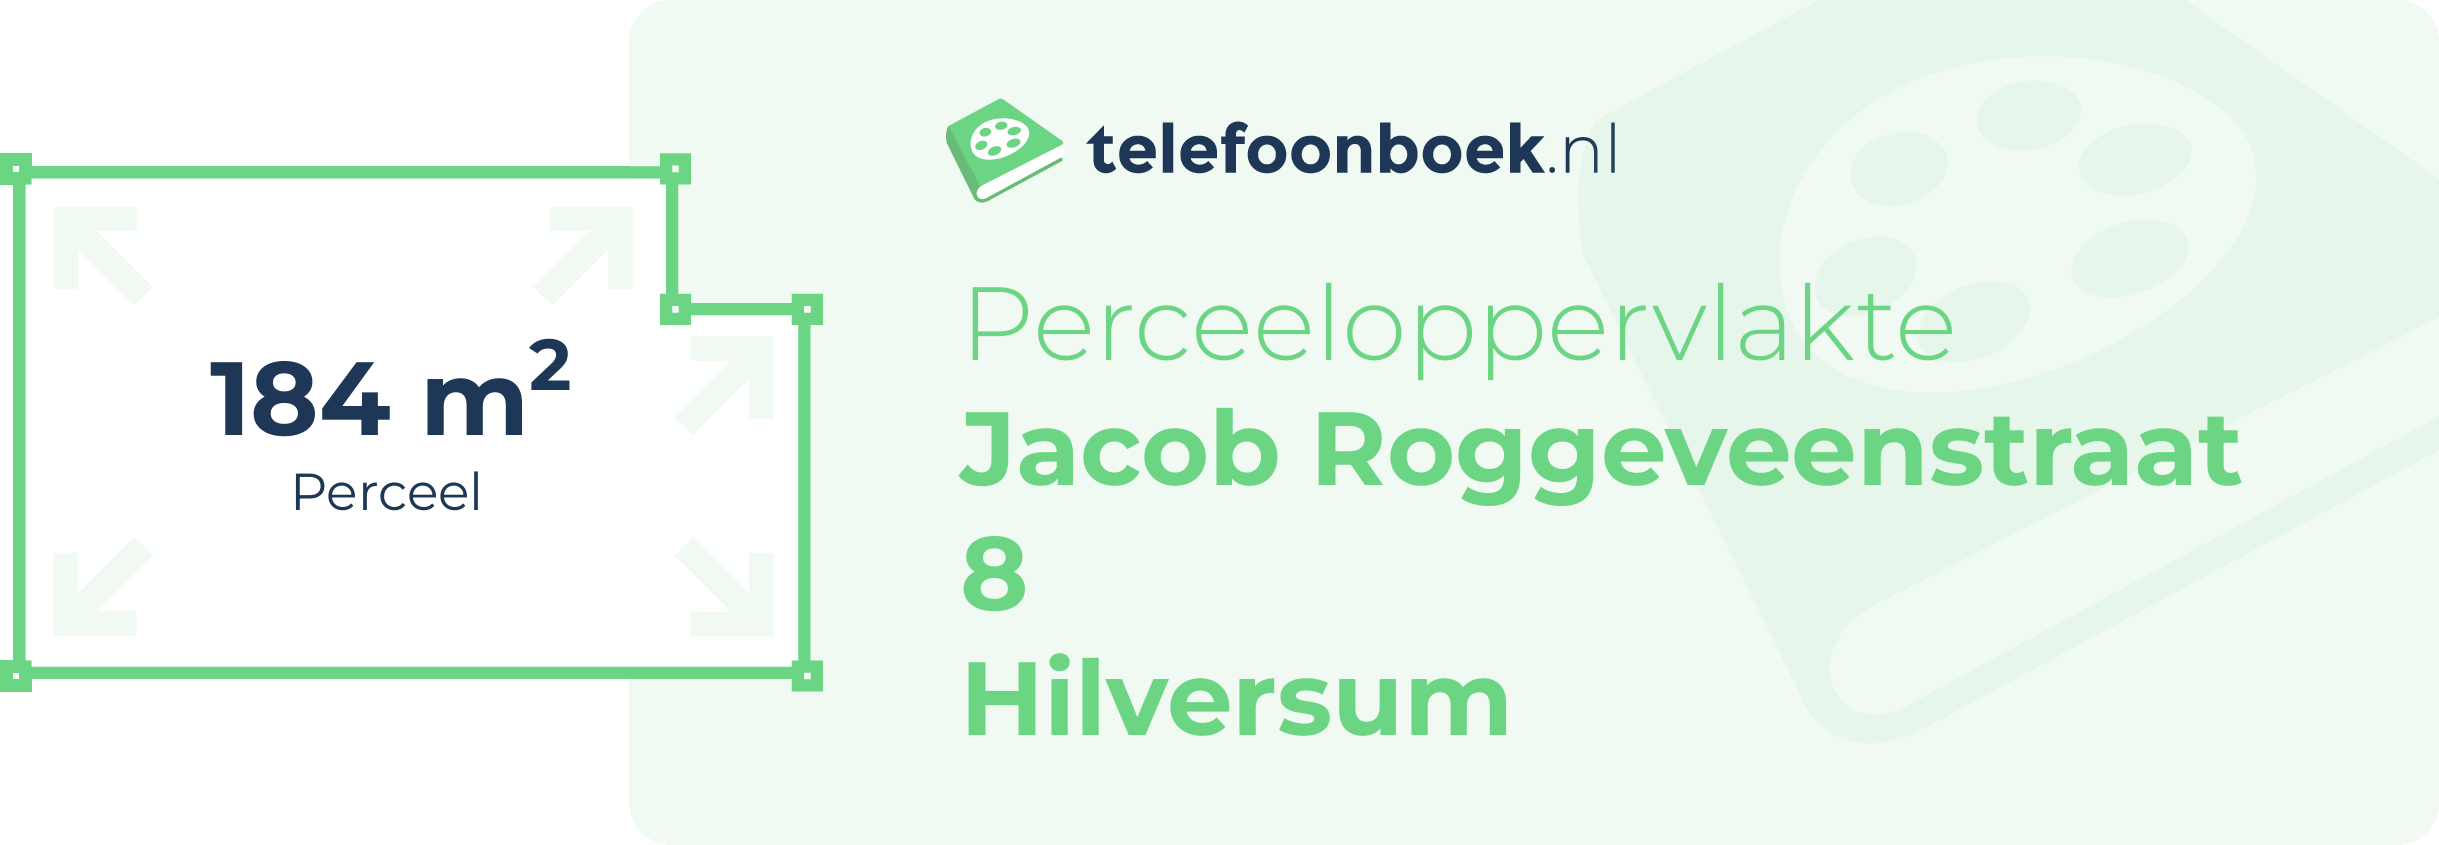 Perceeloppervlakte Jacob Roggeveenstraat 8 Hilversum